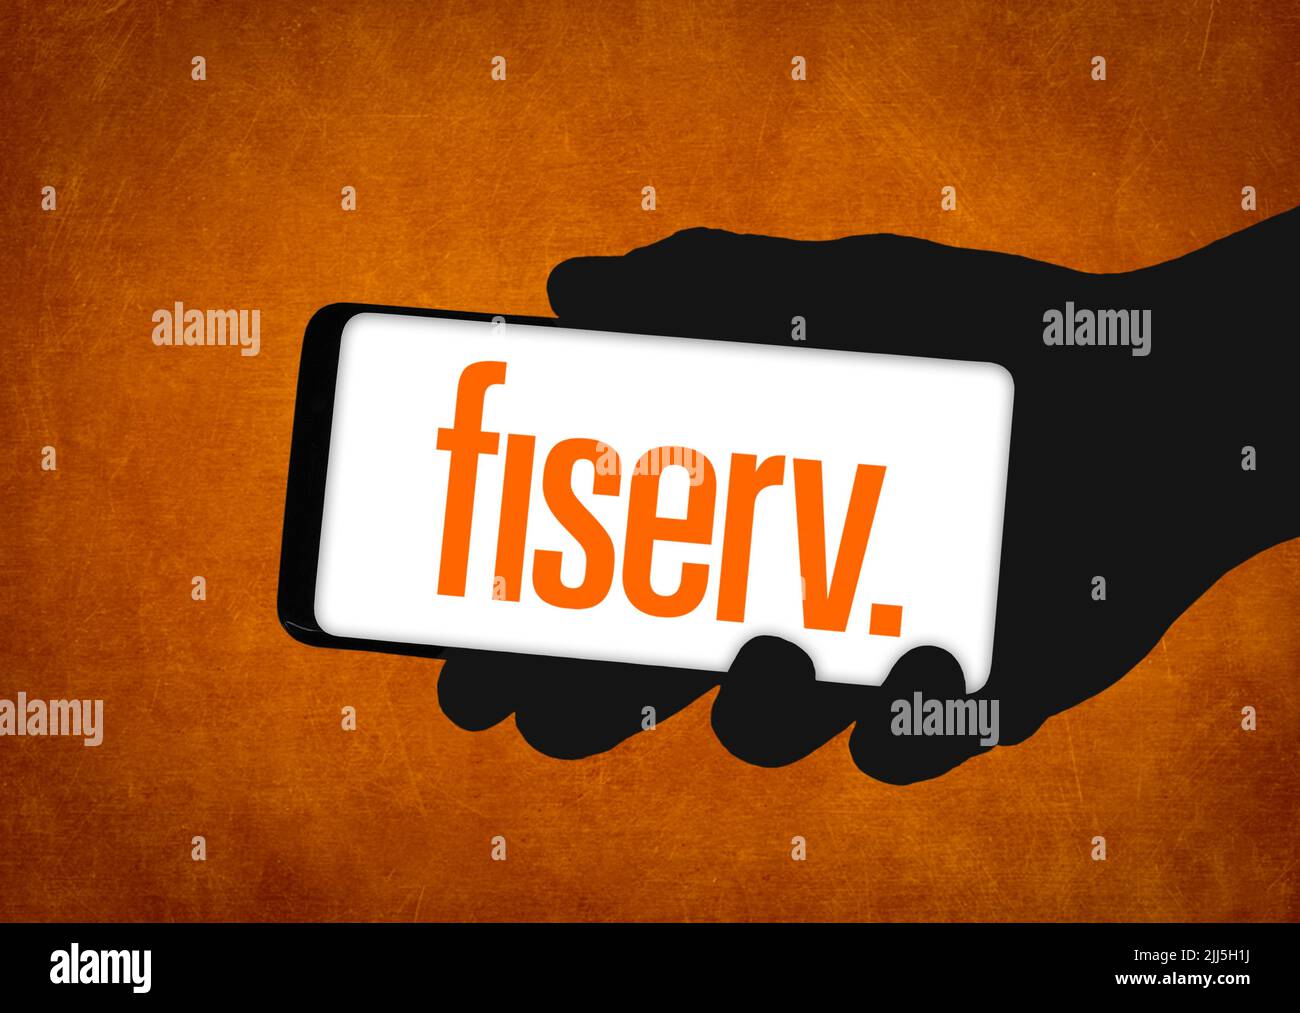 Fiserv company logo on mobile device Stock Photo